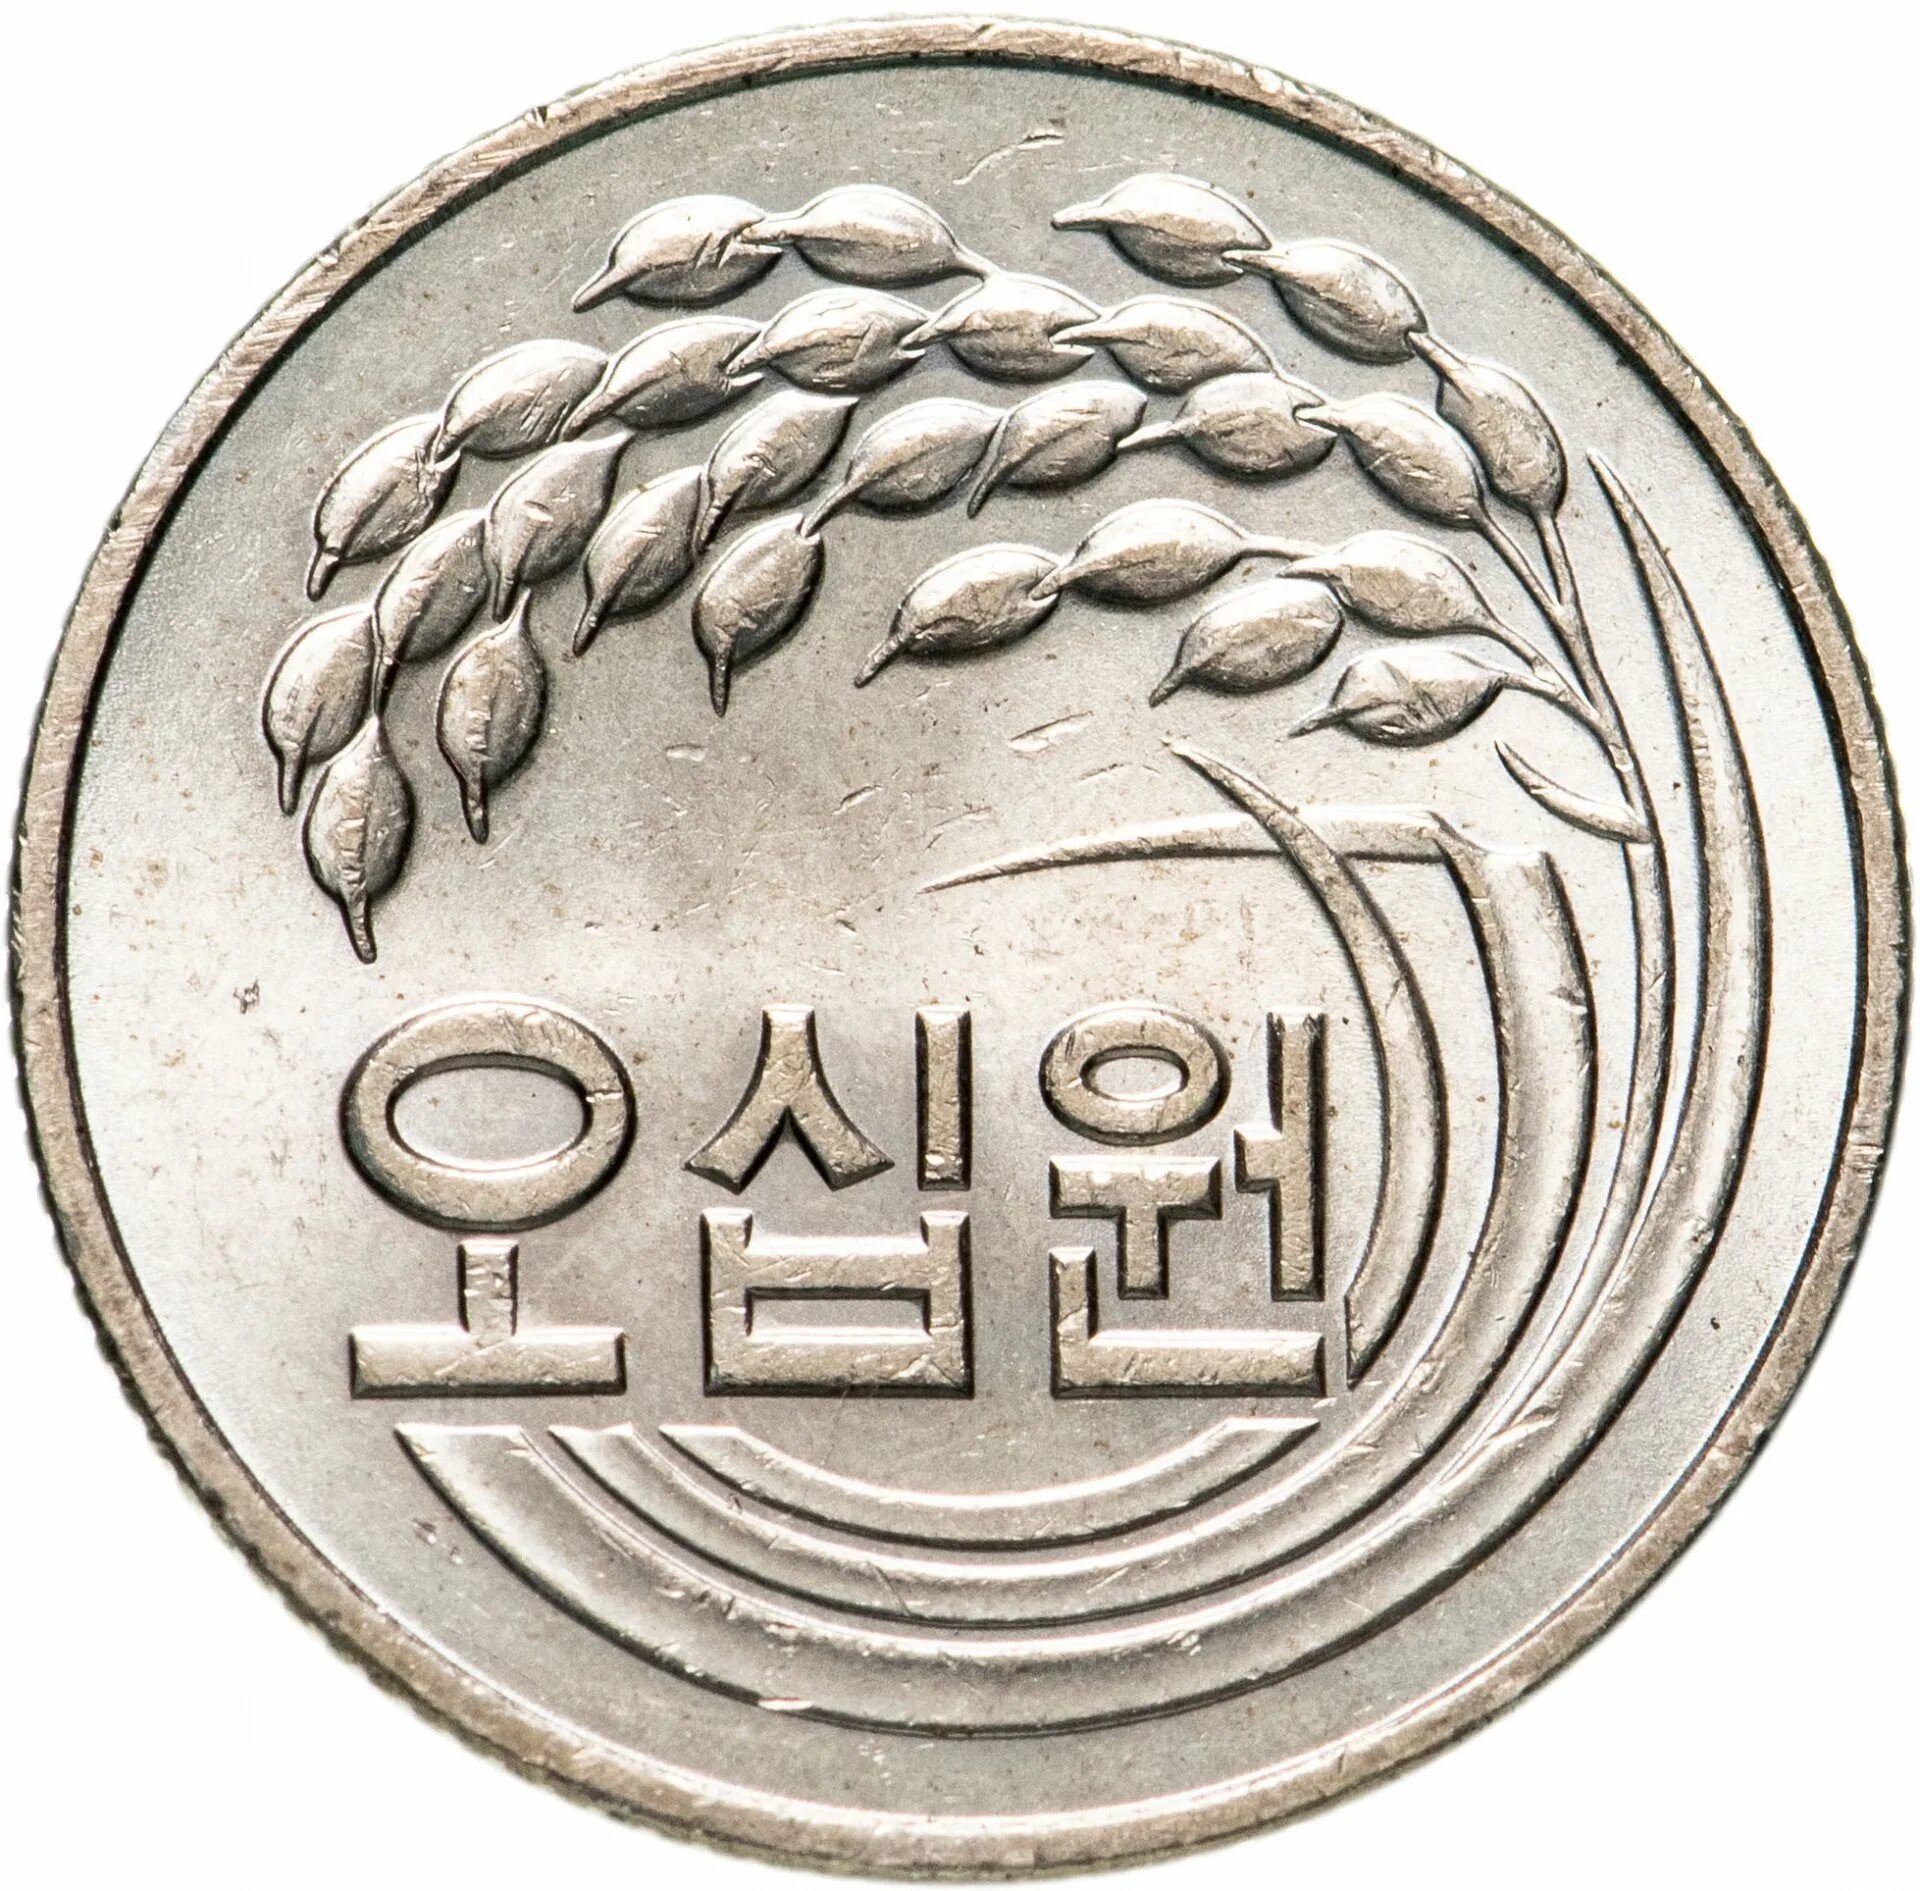 Корейские монеты 50 вон. Монета Южной Кореи 50 вон. Монета Южная Корея 50 1982. 50 Корейских вон монета 2010.